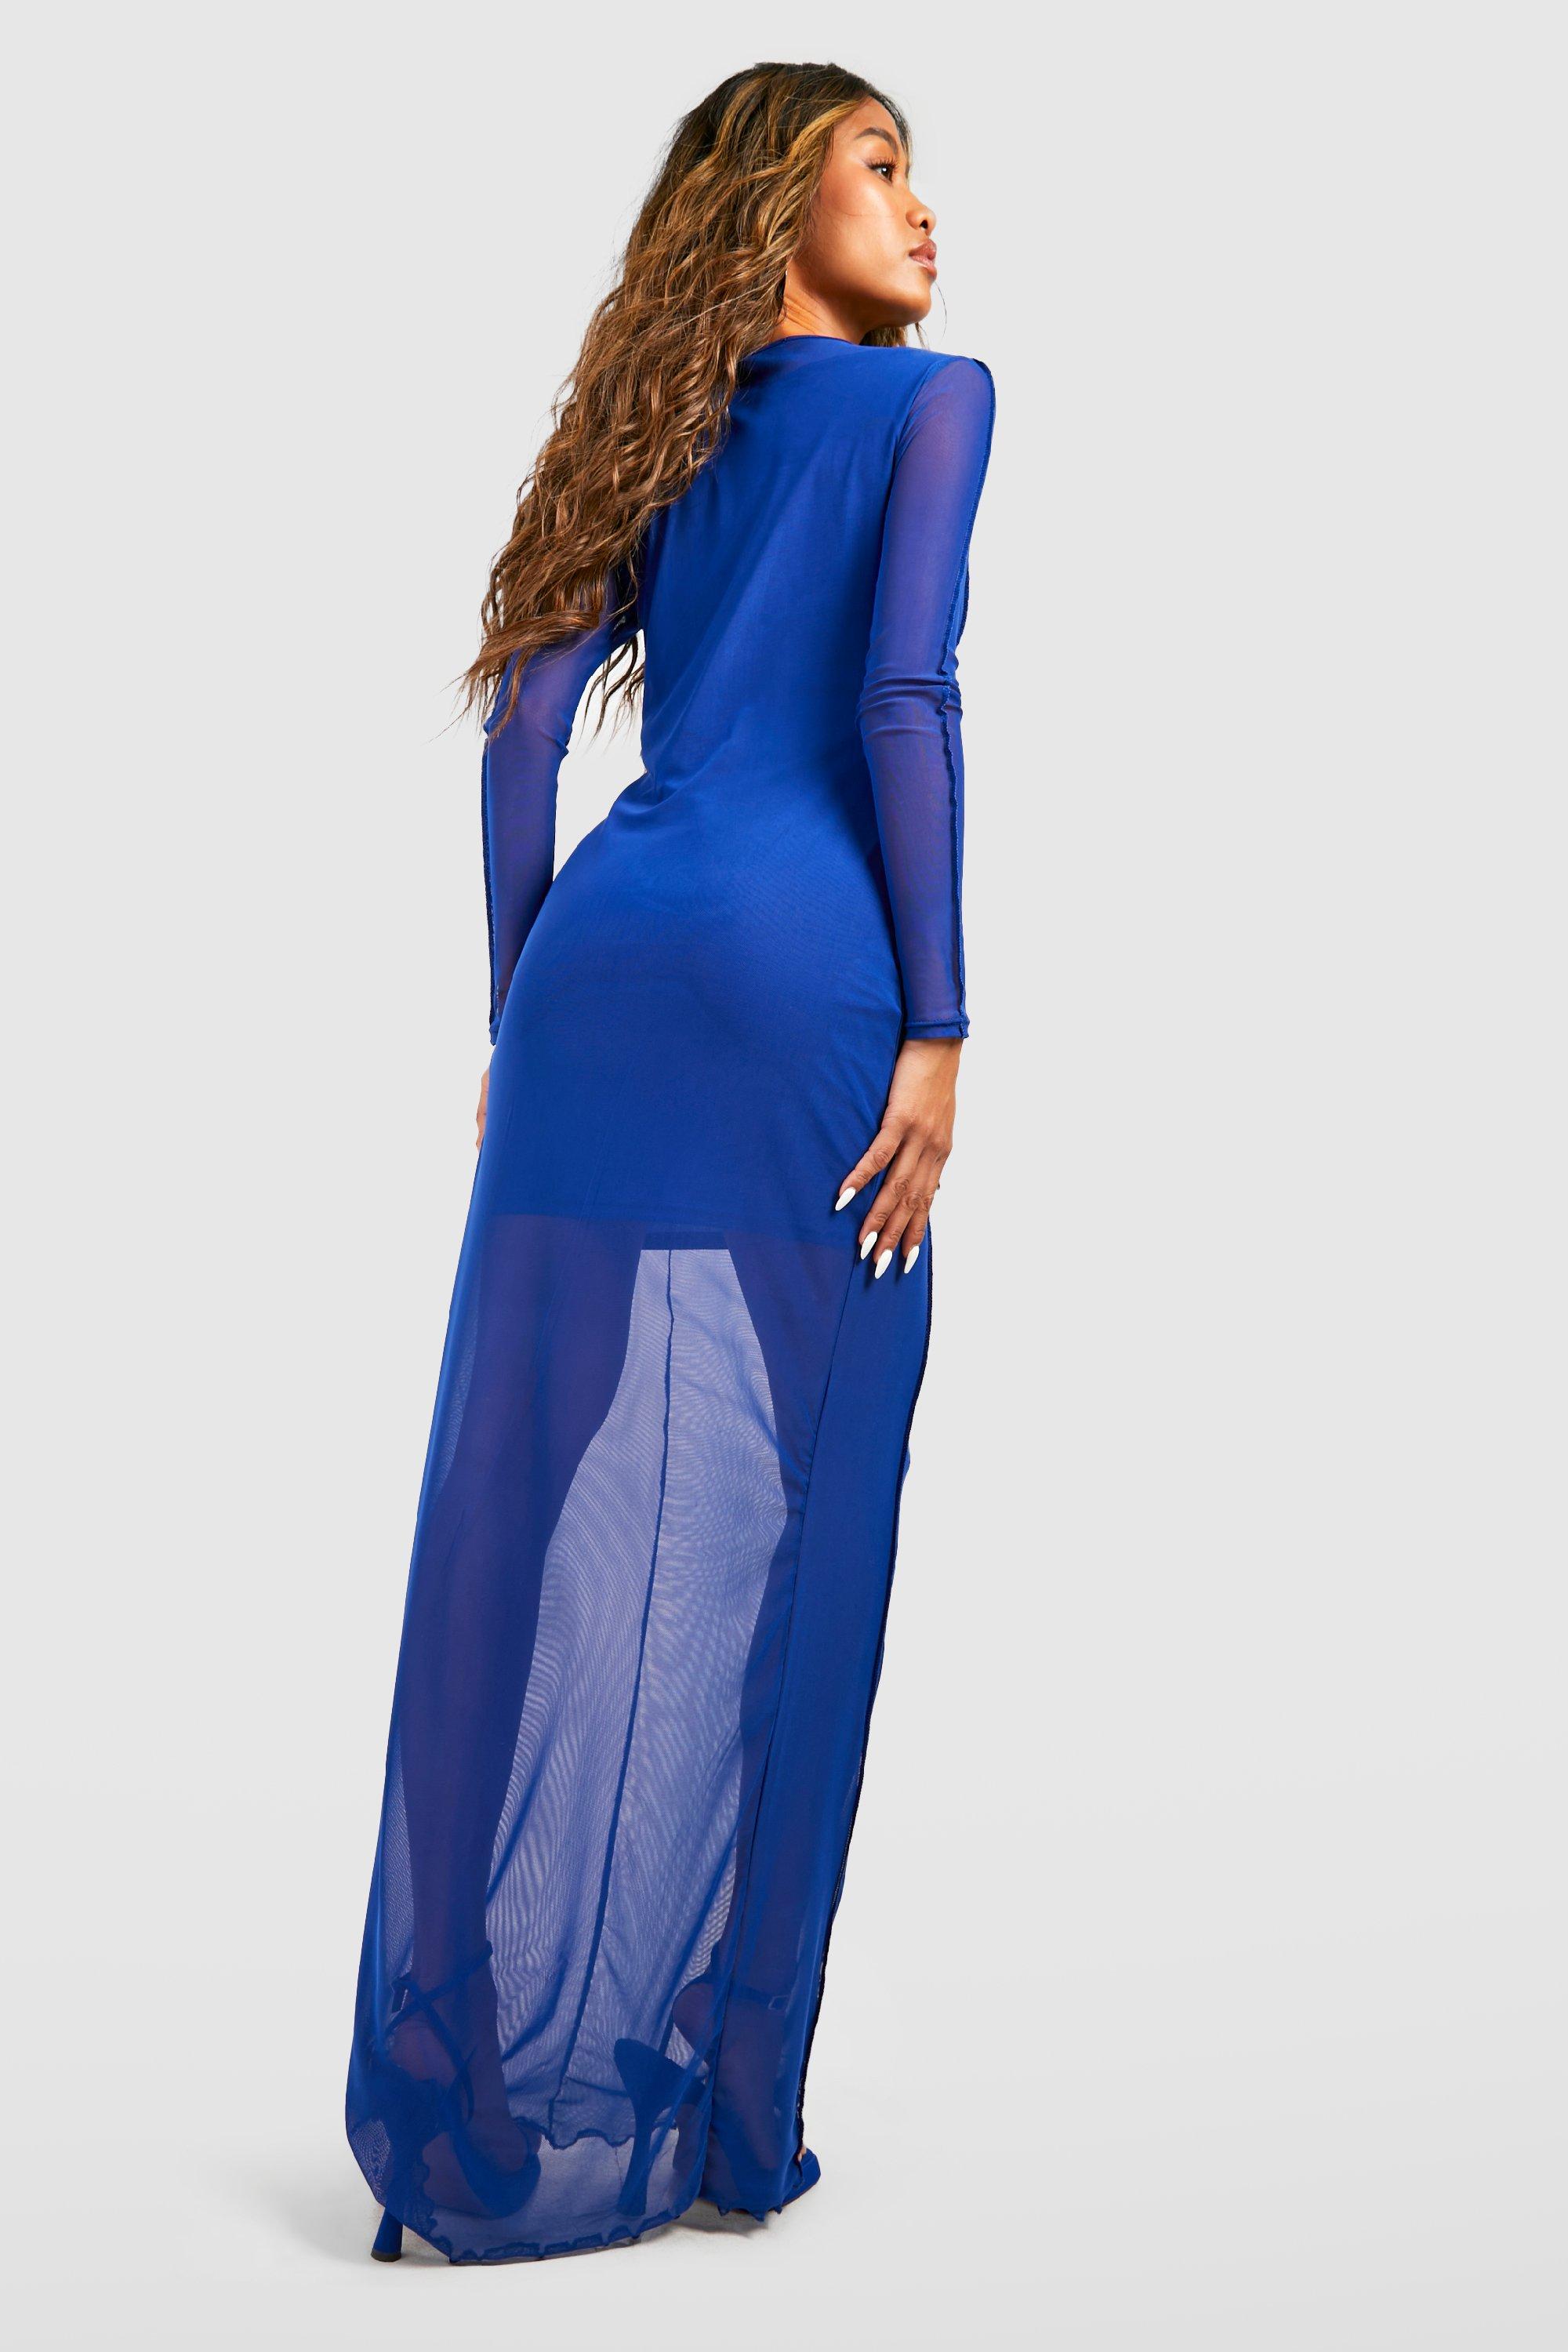 blue mesh dress